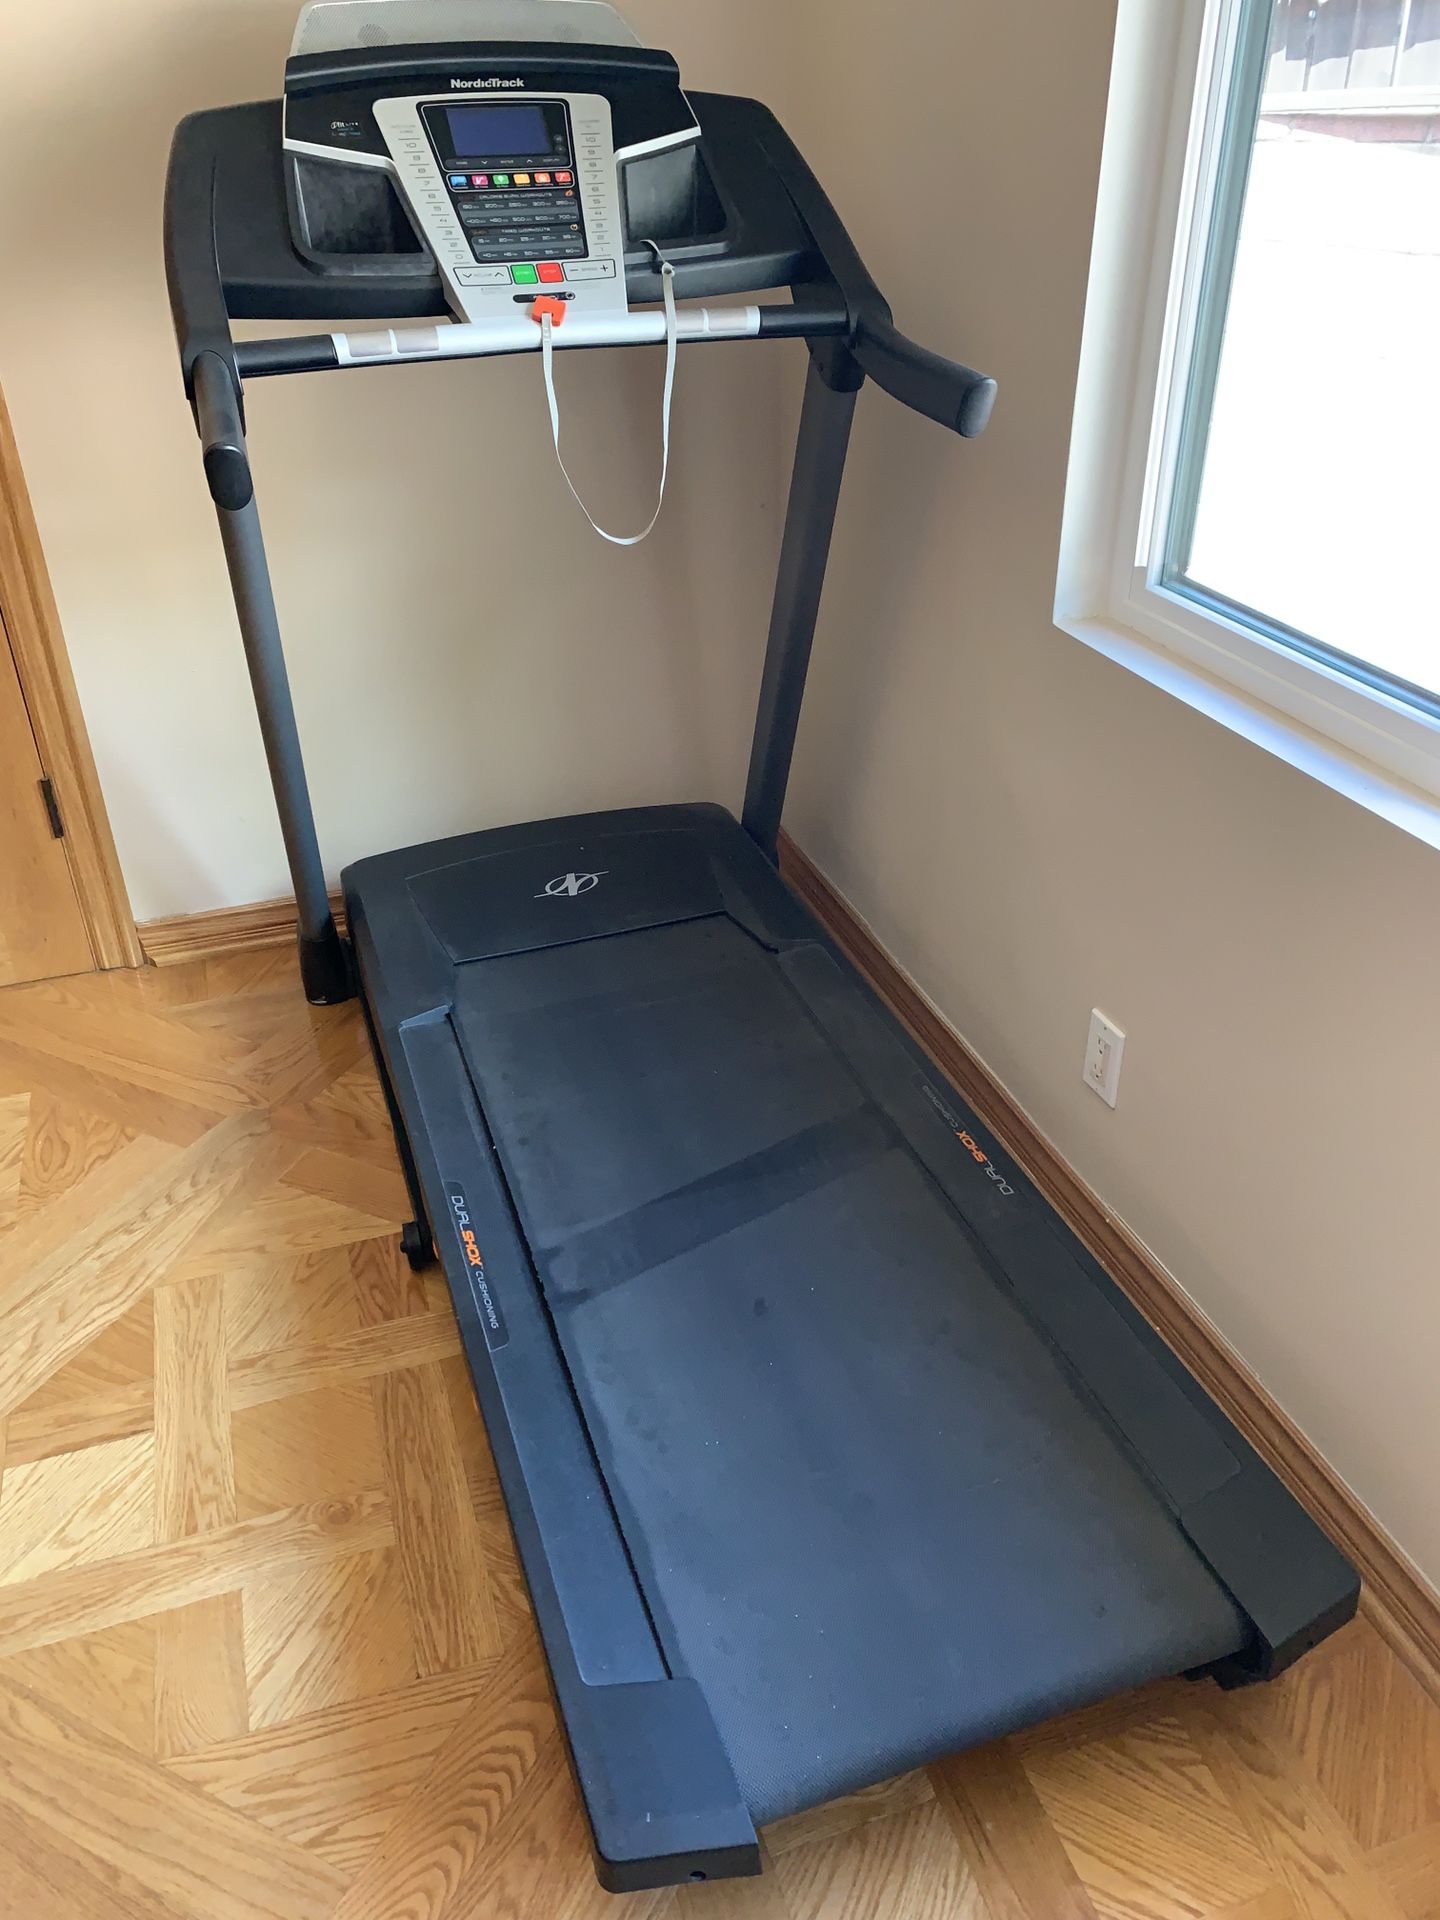 NordicTrack Treadmill Great Condition